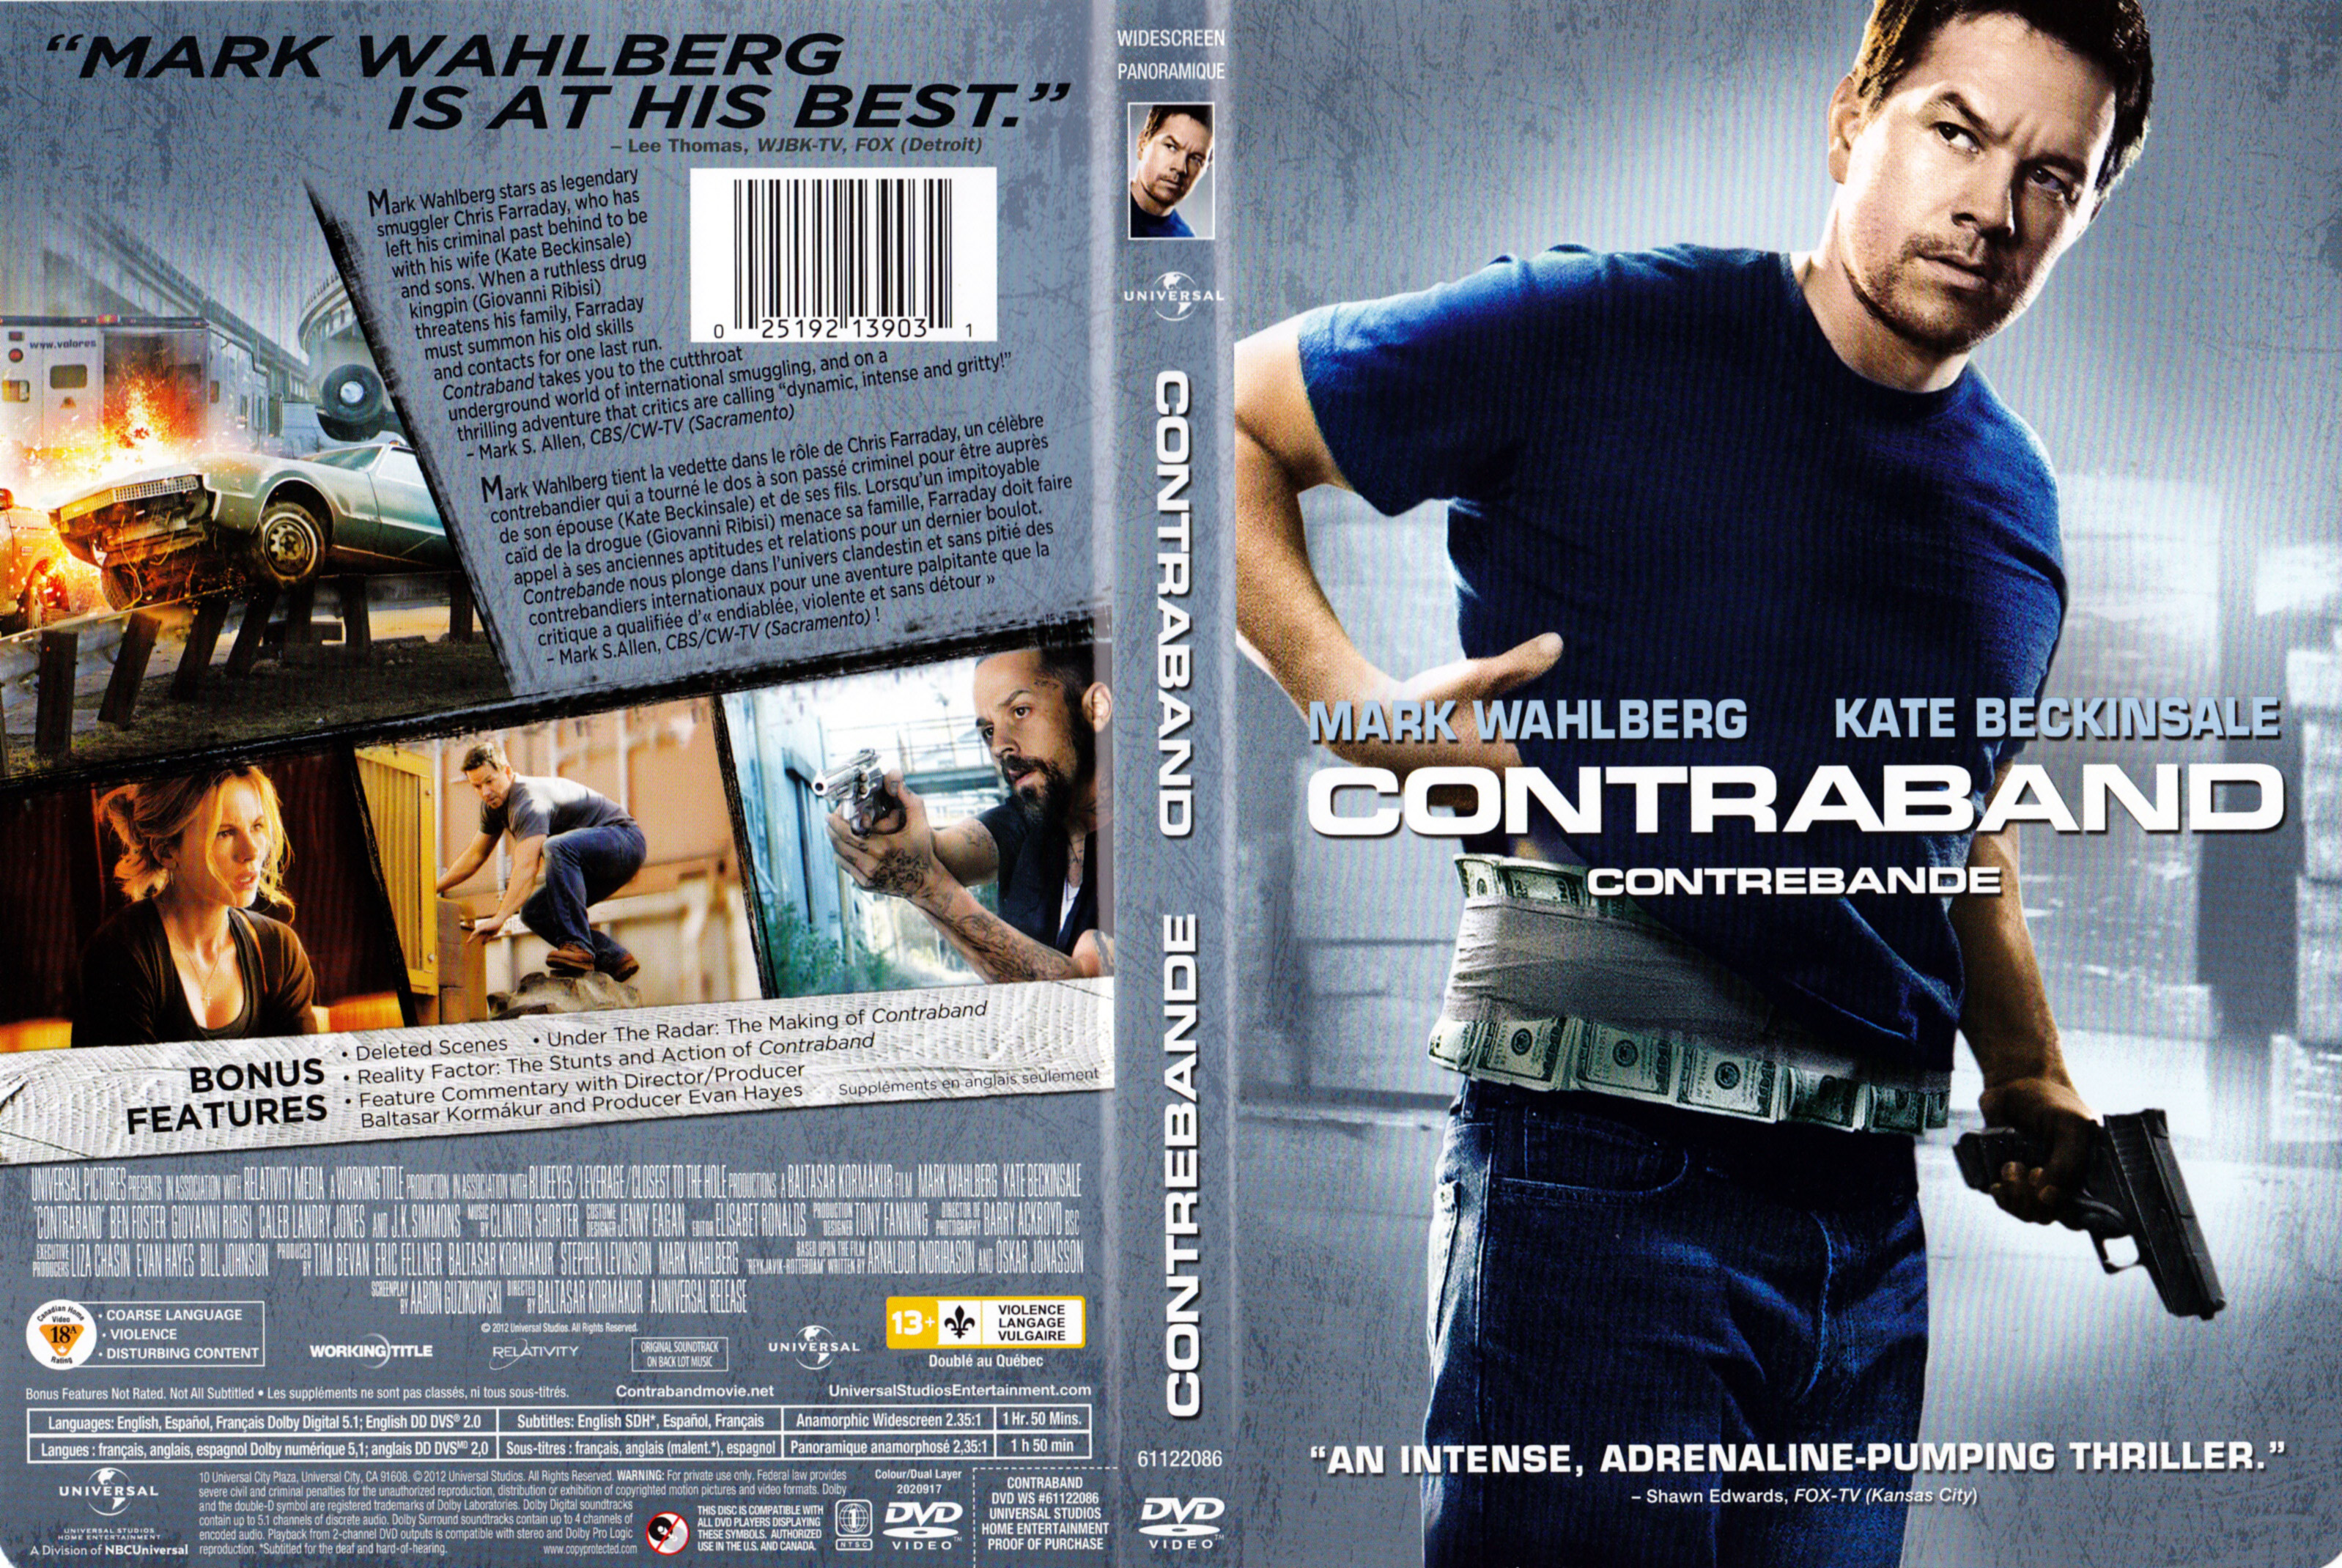 Jaquette DVD Contraband - Contrebande (Canadienne)